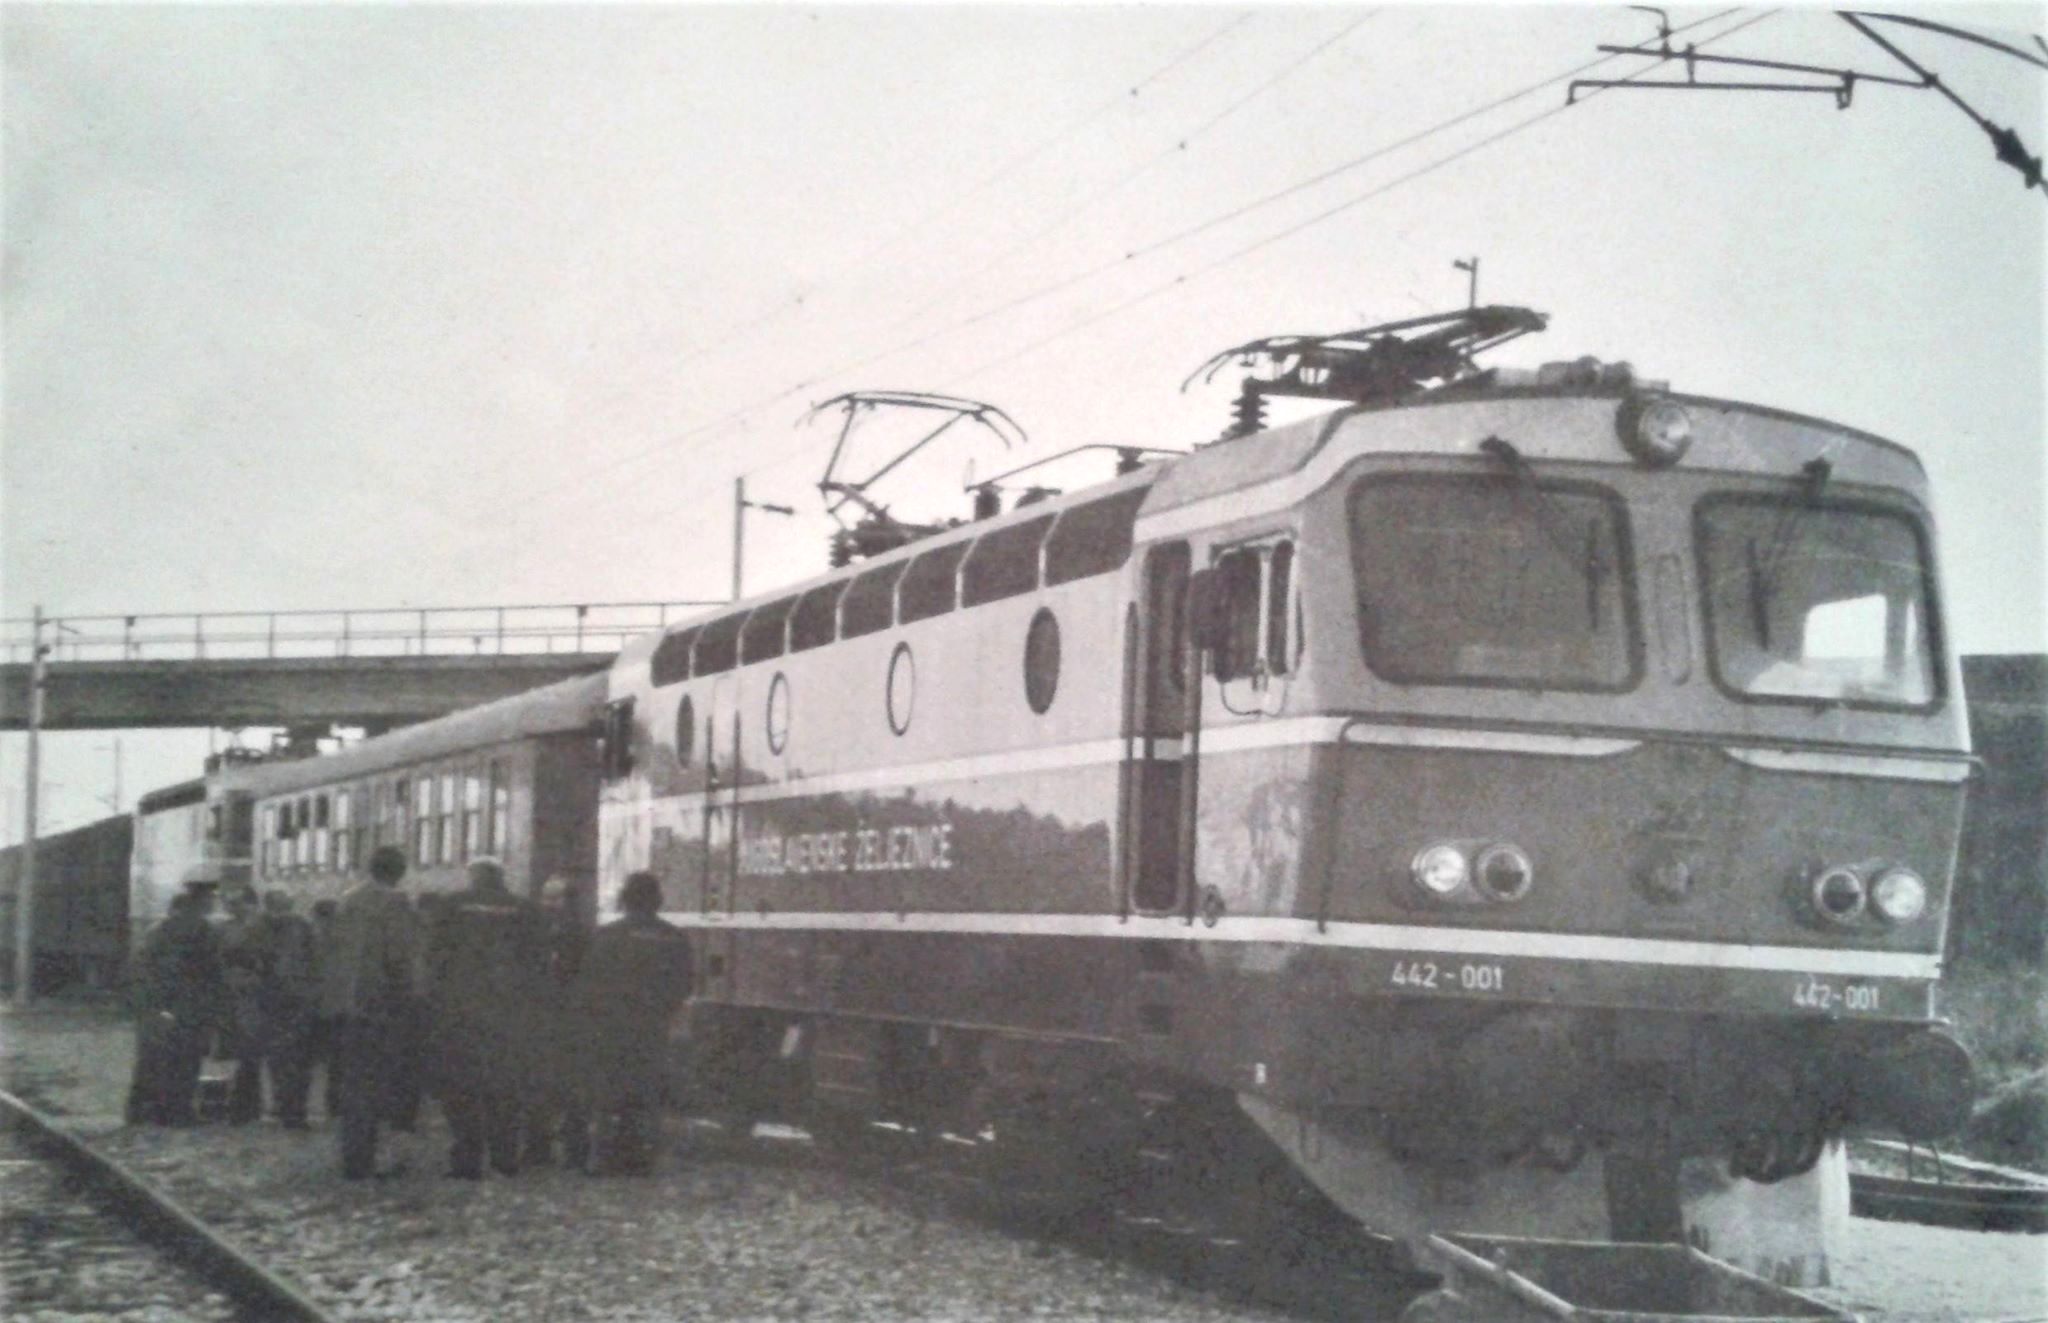 Proba prve elektricne lokomotive domace konstrukcije serije JZ 442-001 poznate TIRISTORKE kod Zagreba...80 tih..jpg